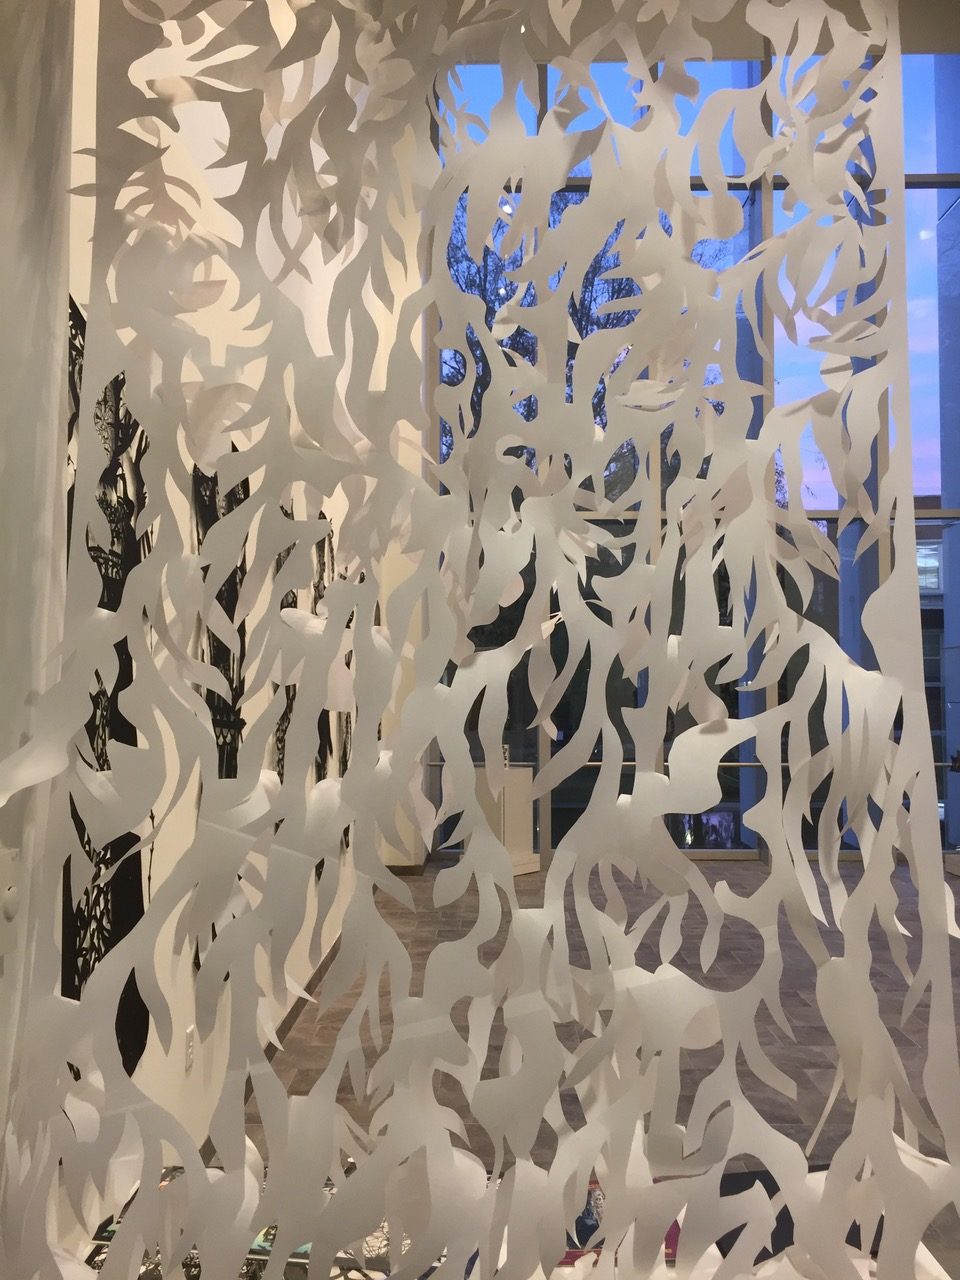 Botanical papercut installation by Beatrice Coron